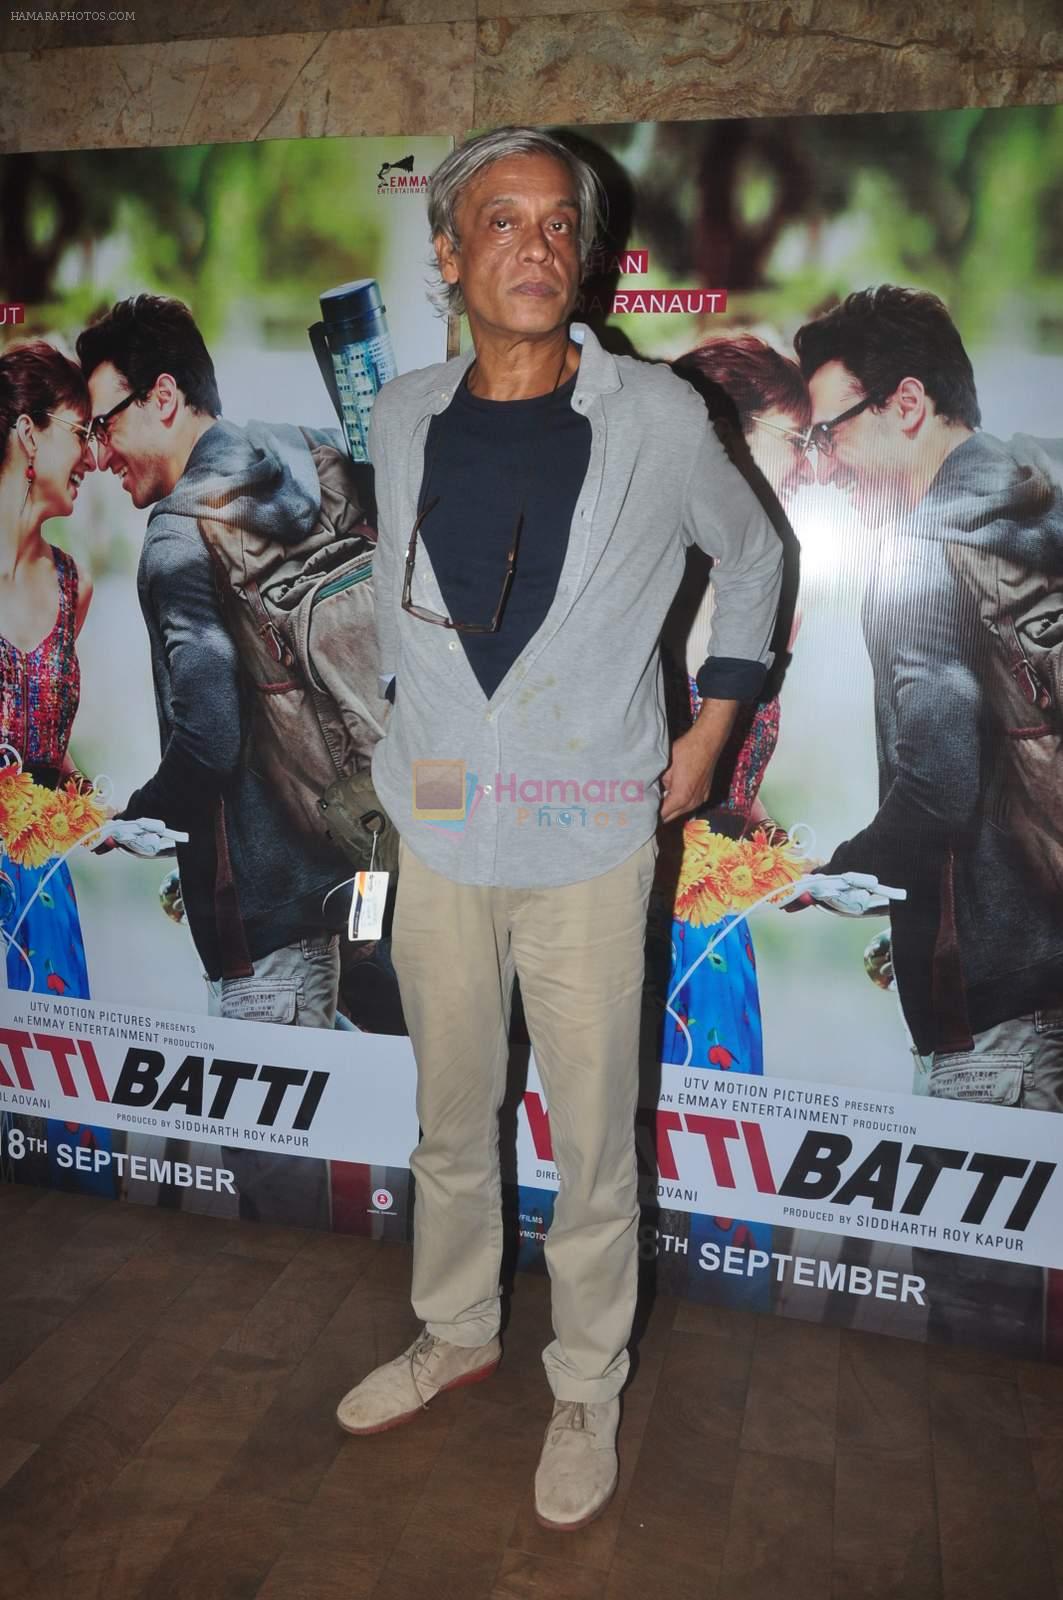 at Katti Batti screening hosted by Kangana on 17th Sept 2015